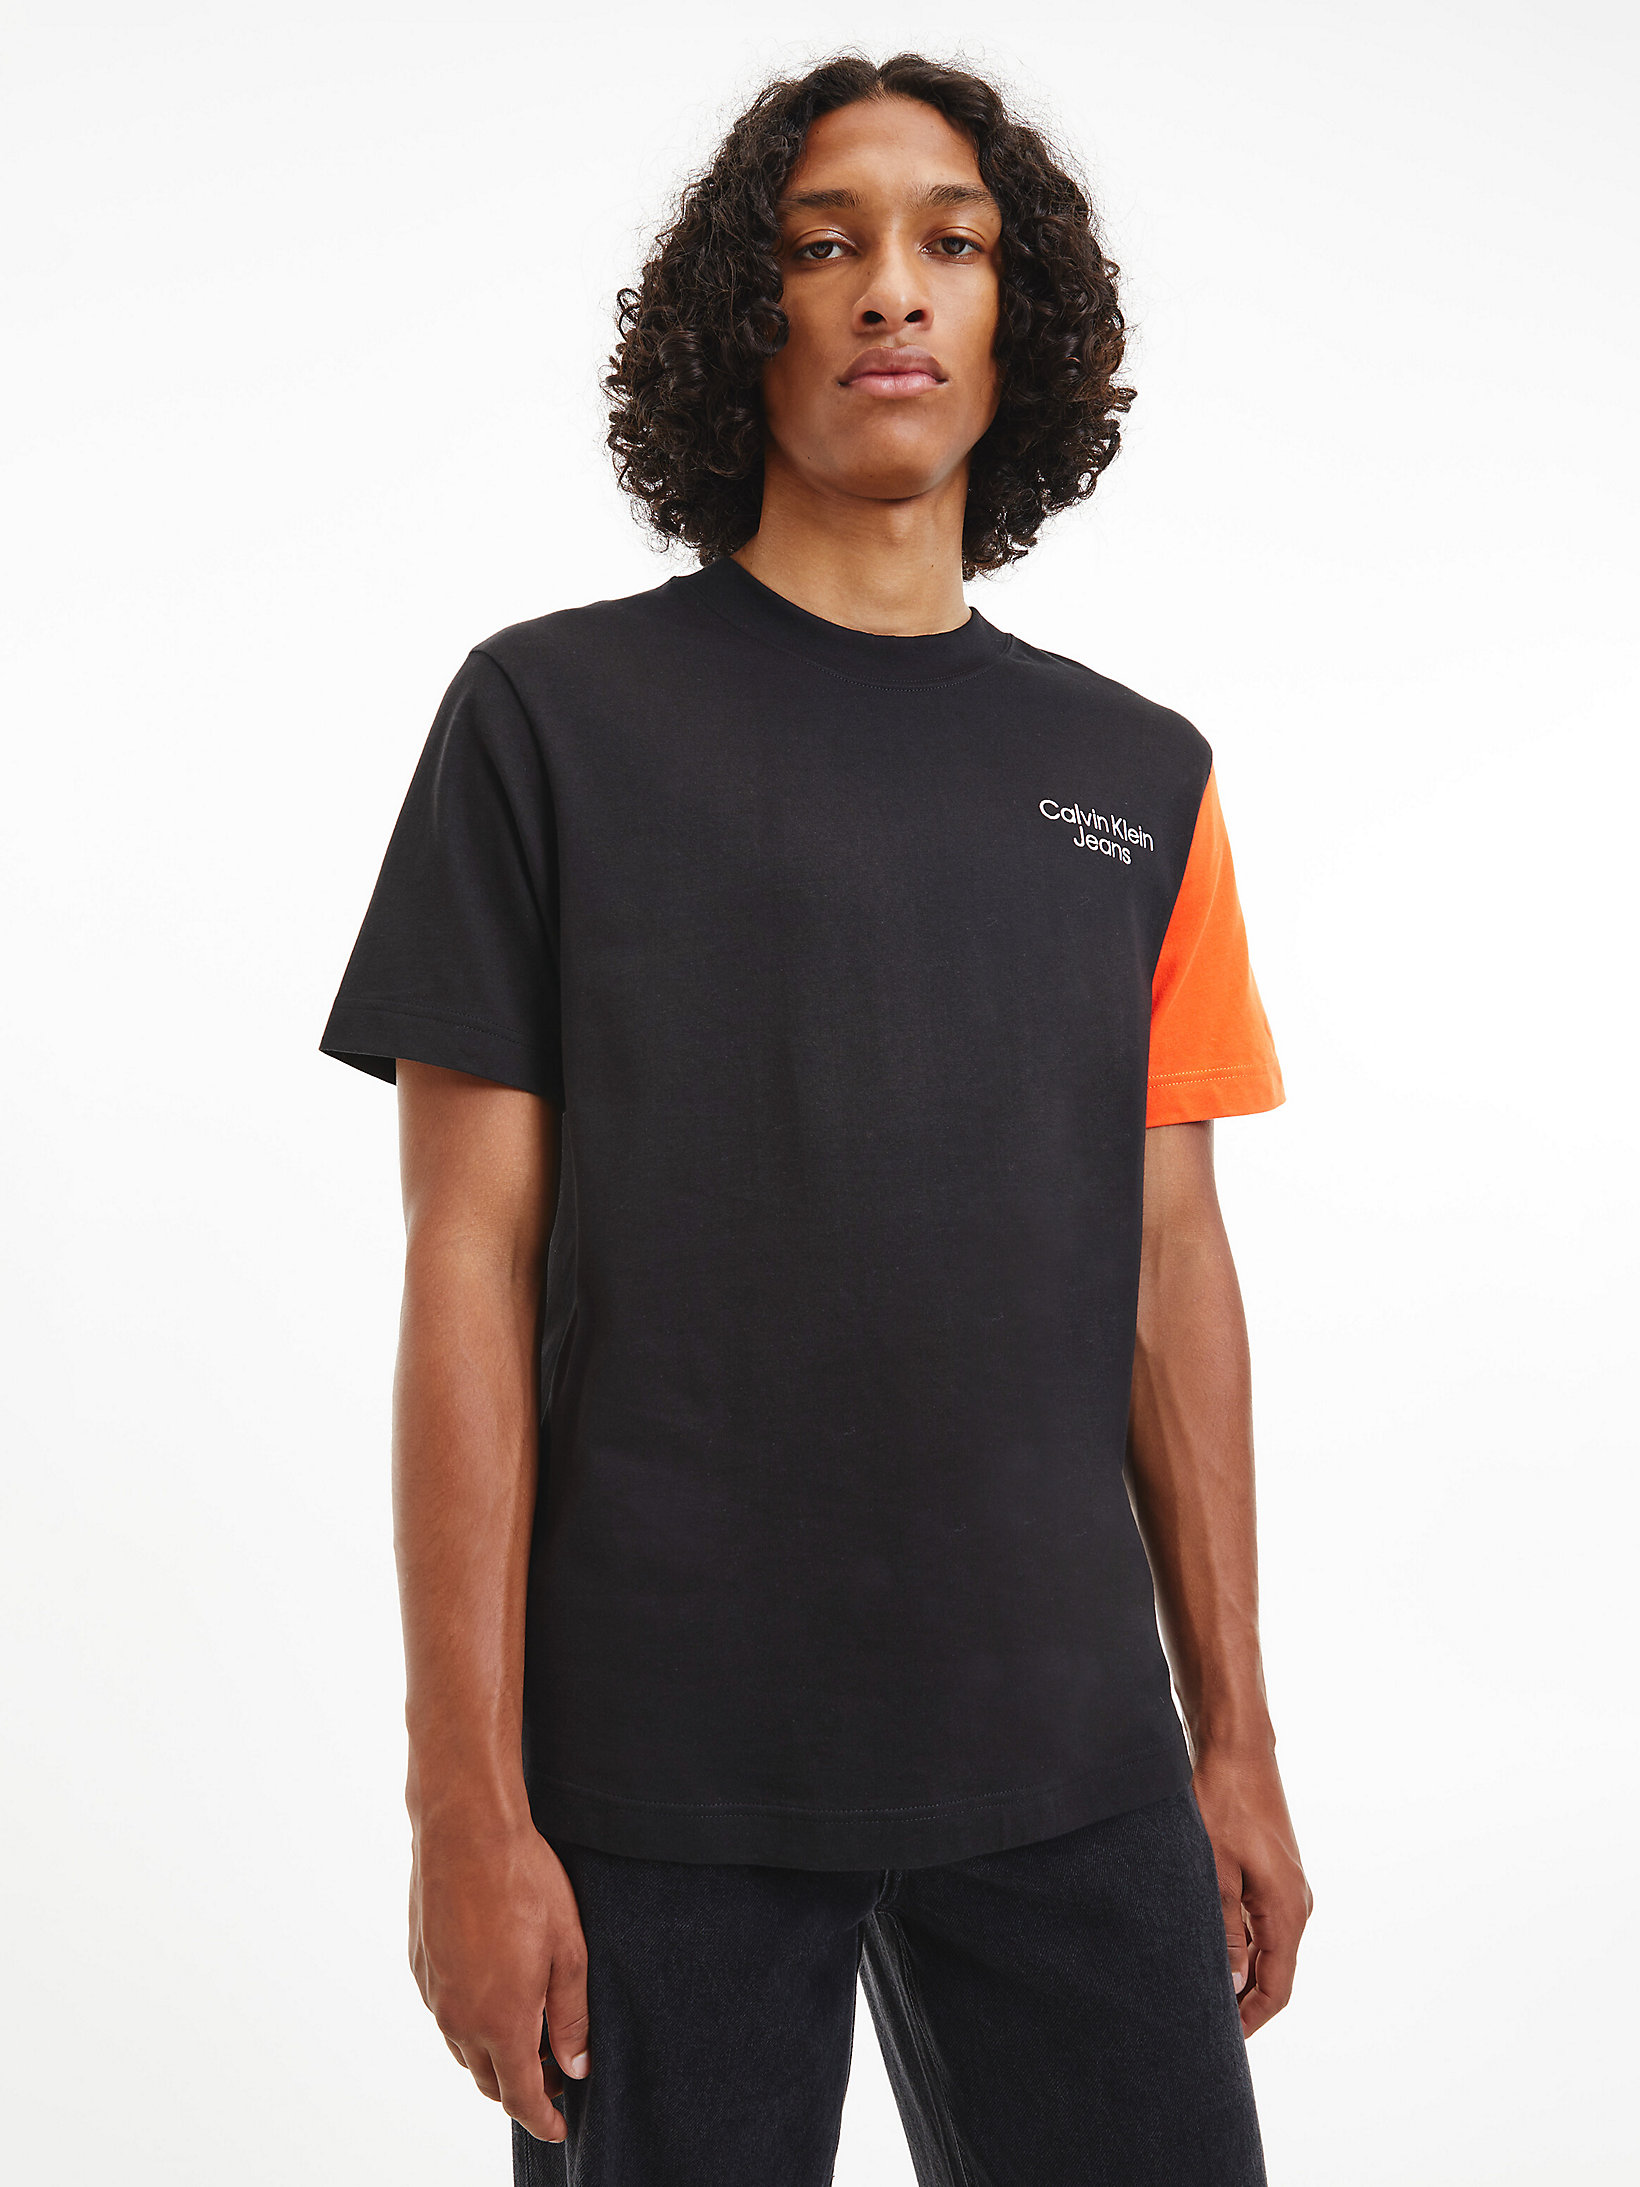 CK Black / Coral Orange > Свободная футболка контрастных цветов > undefined женщины - Calvin Klein